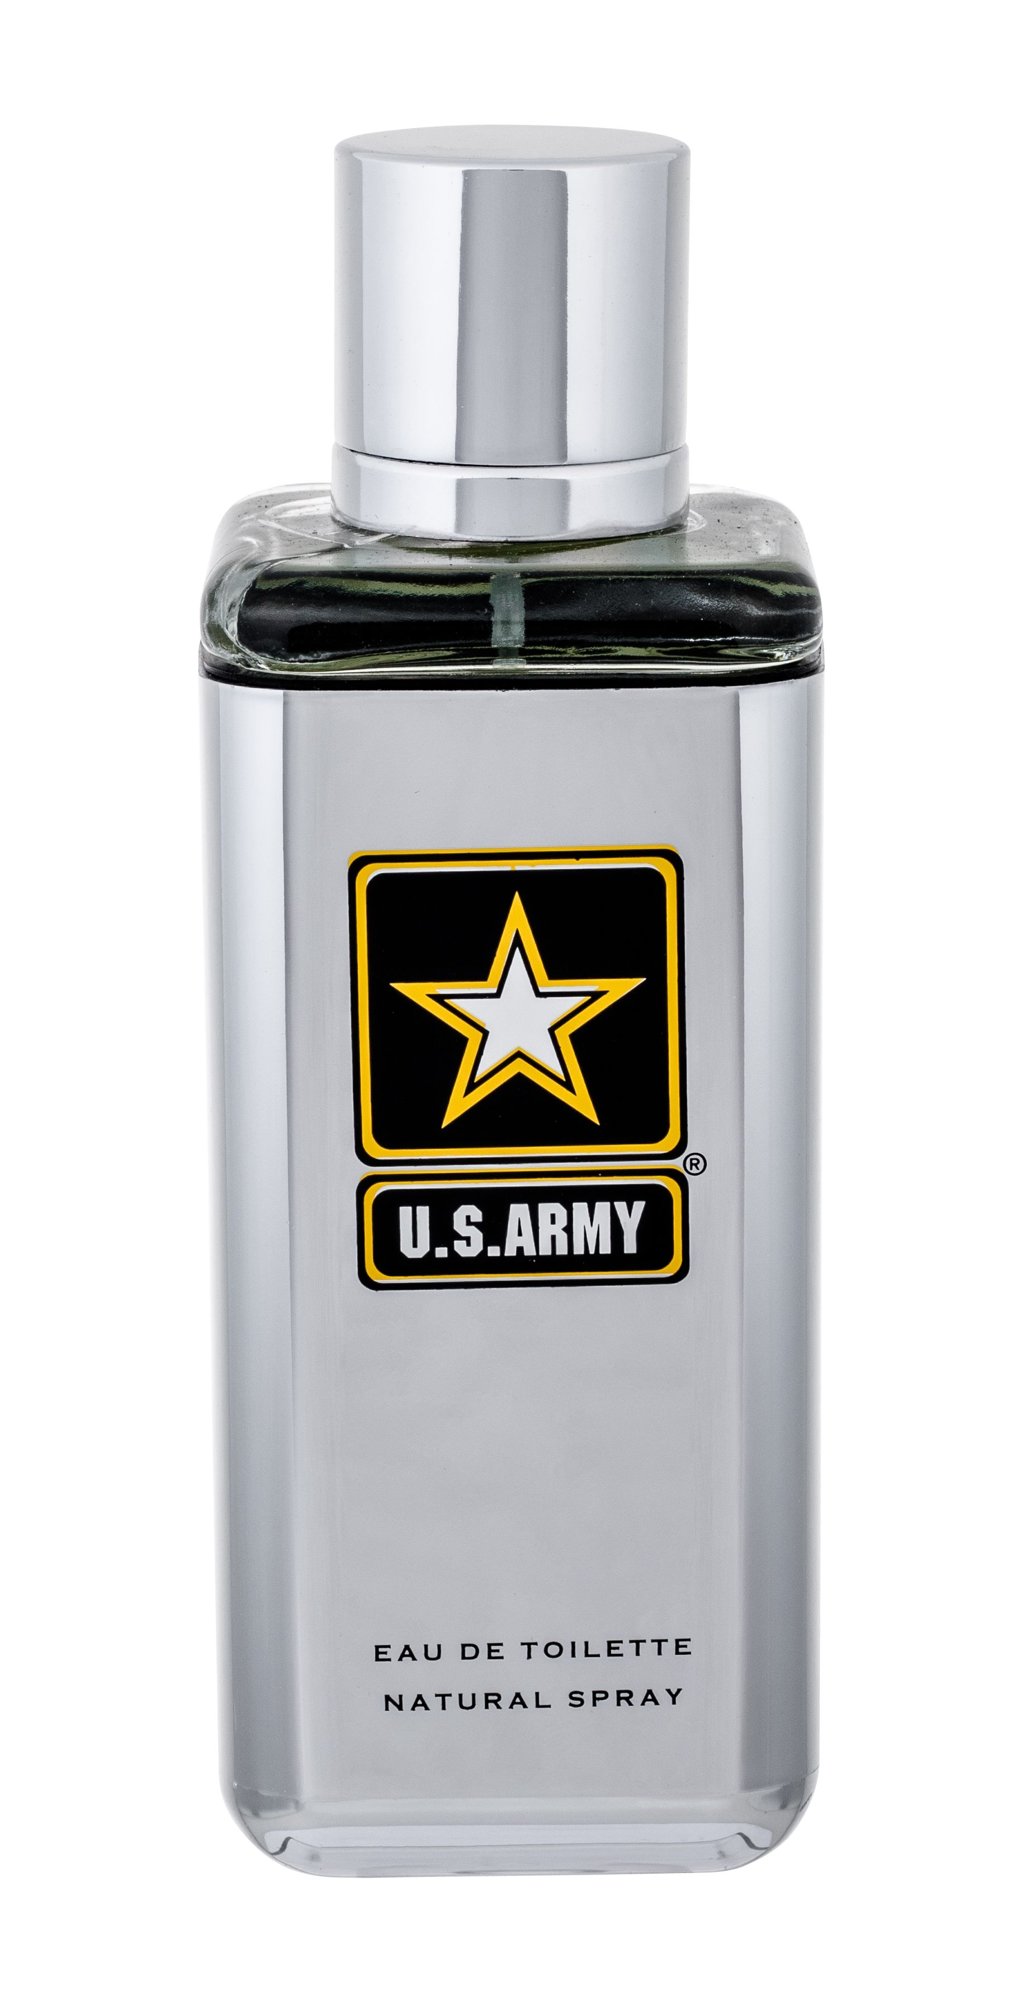 U.S.Army Silver